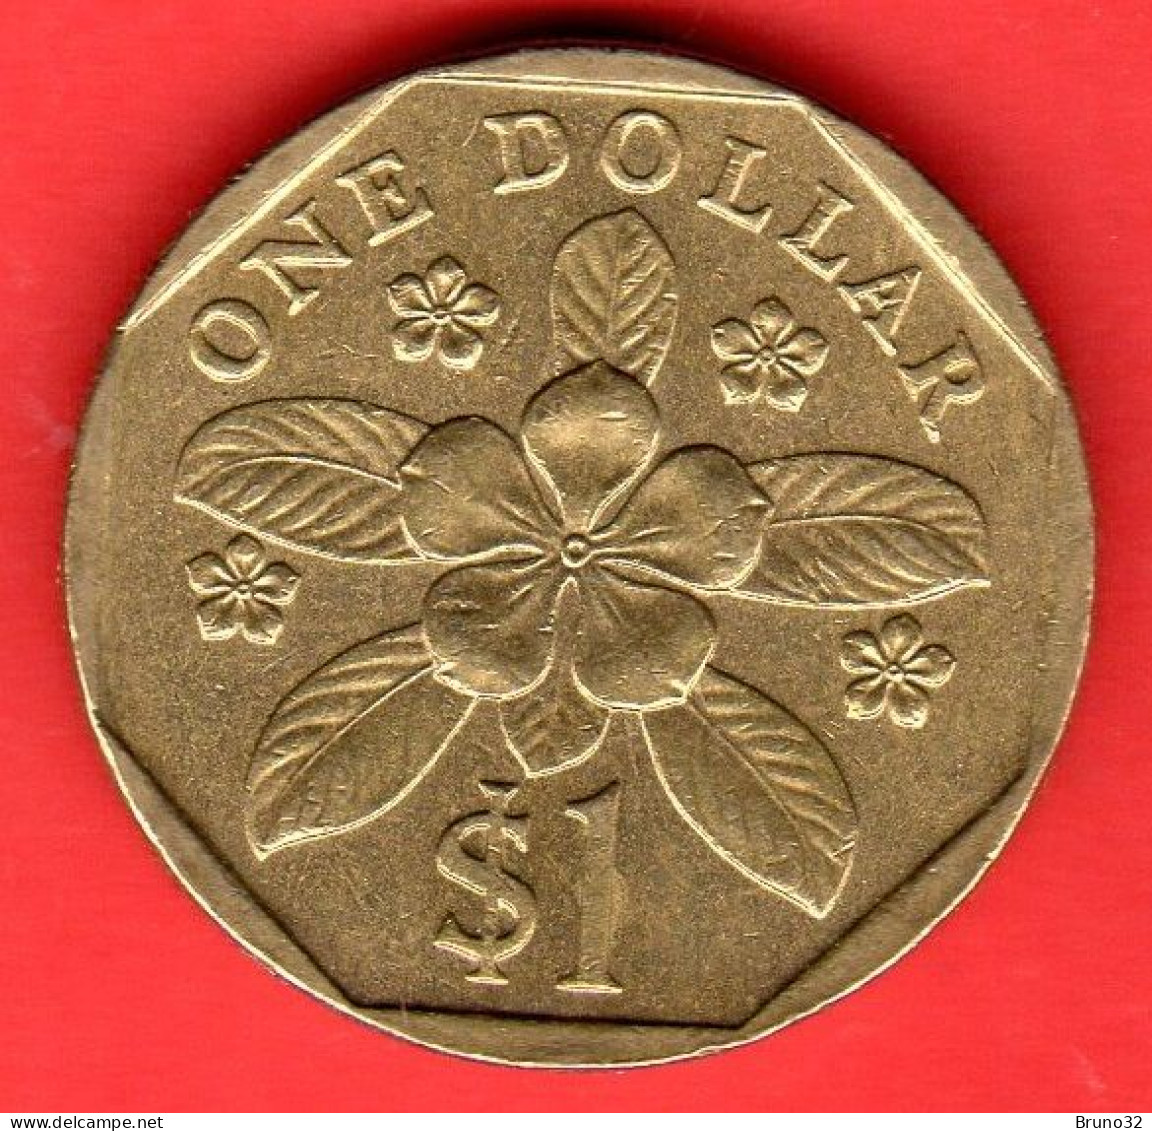 SINGAPORE - Singapura - 1997 - 1 Dollar - QFDC/aUNC - Come Da Foto - Singapur